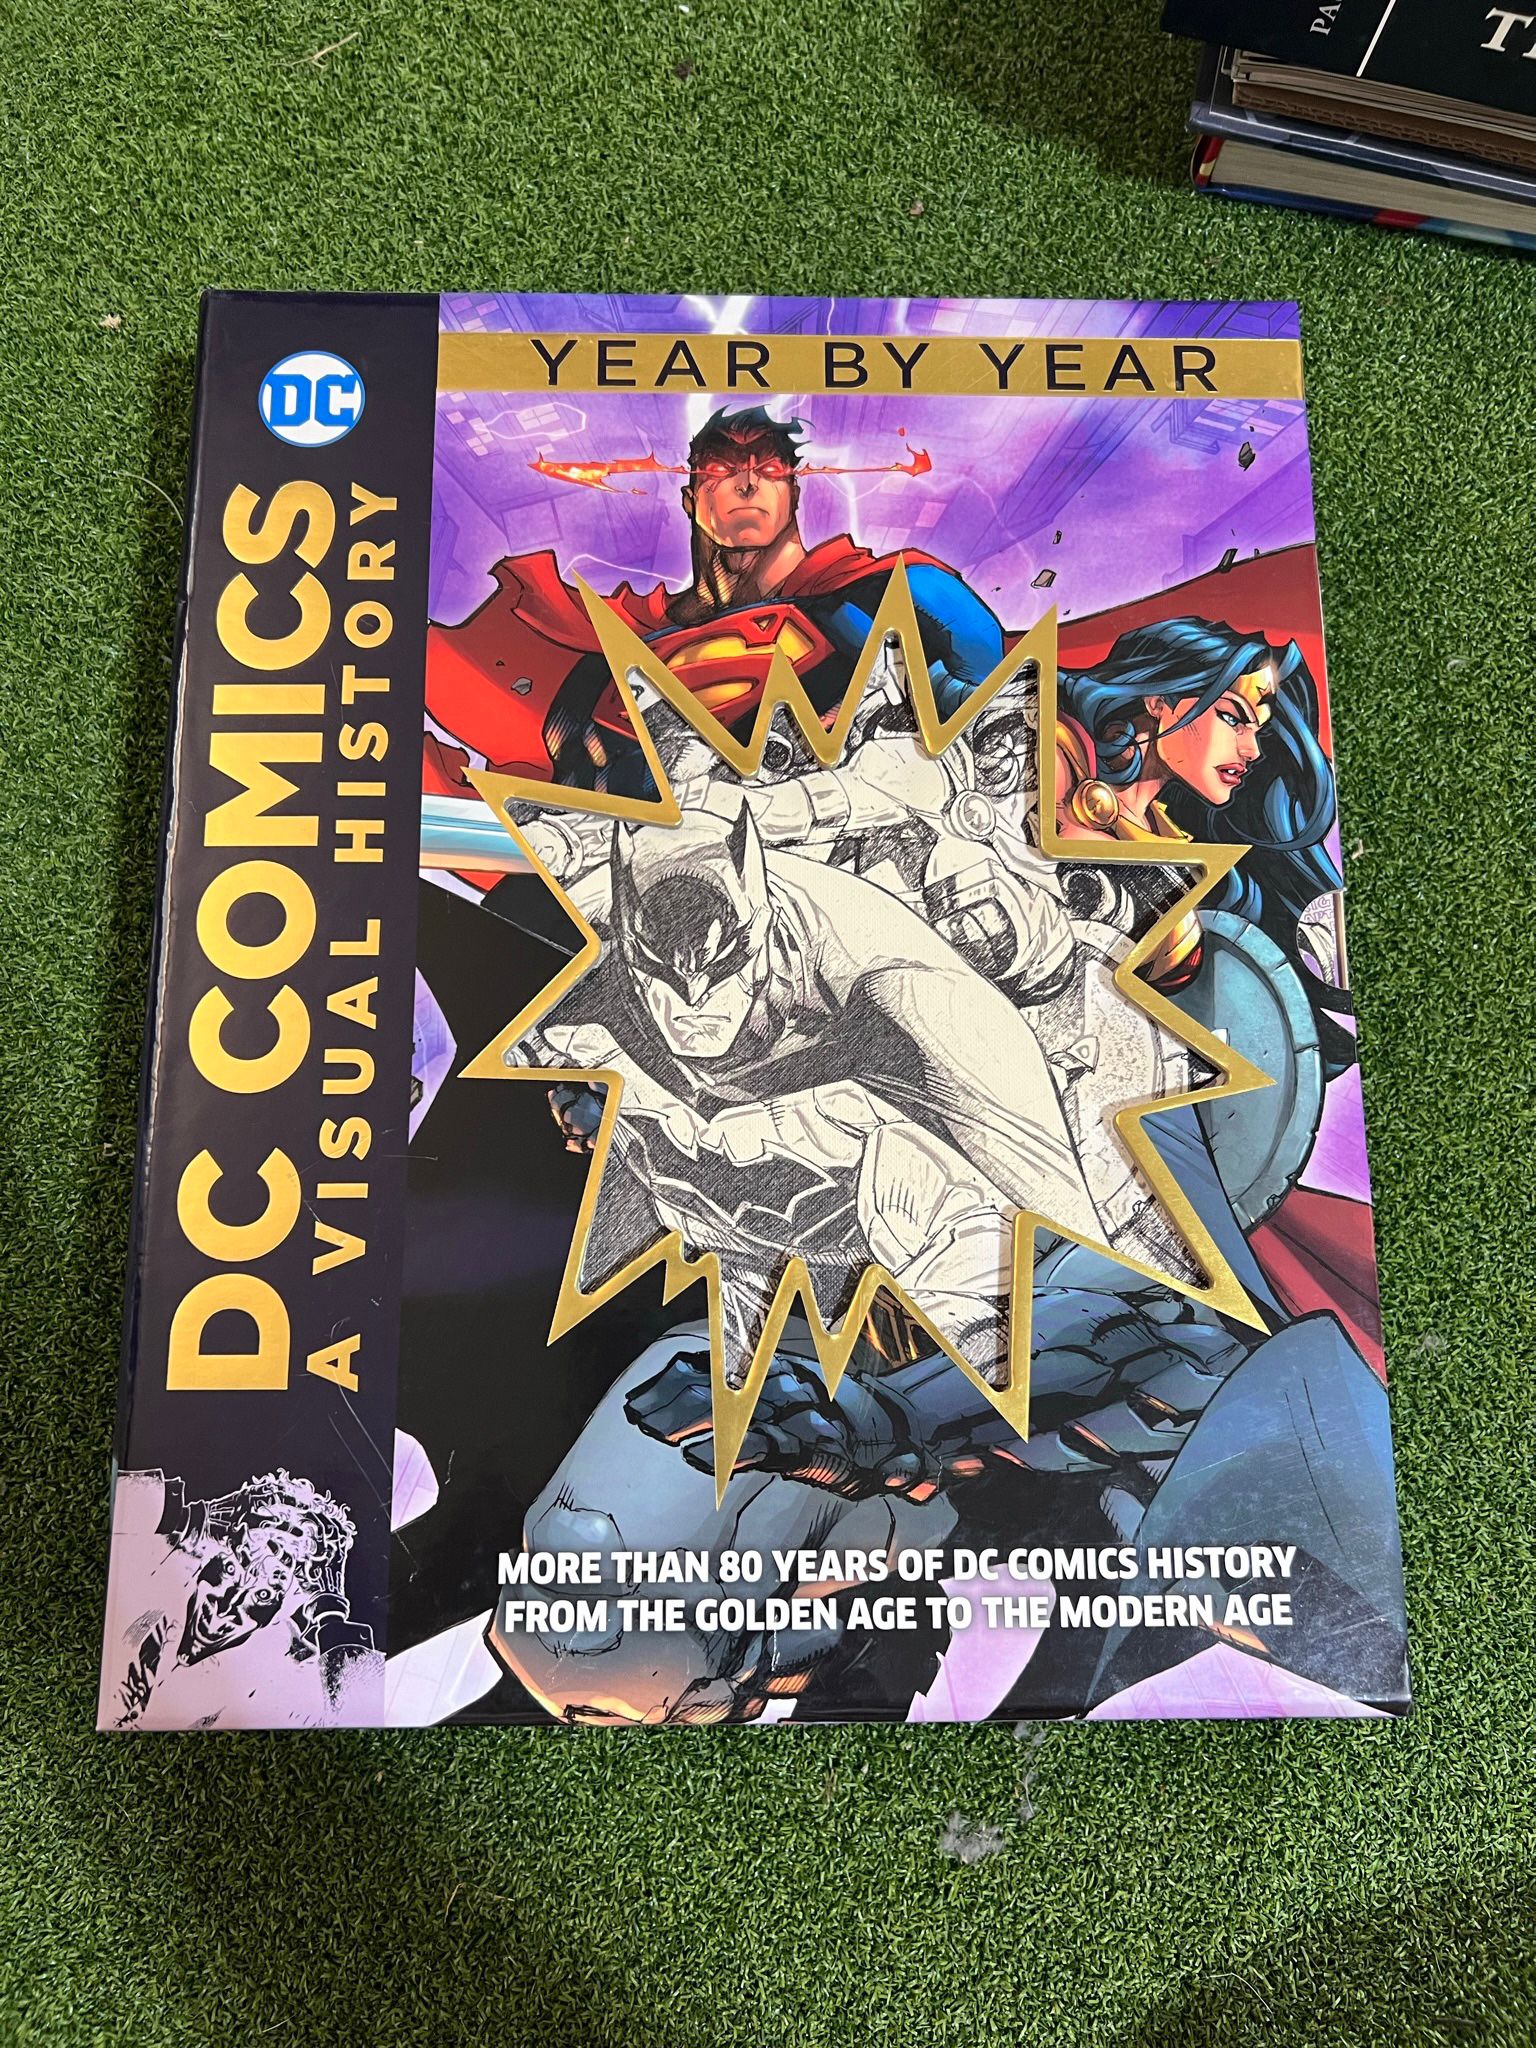 DC COMICS - A Visual history - Year By Year 